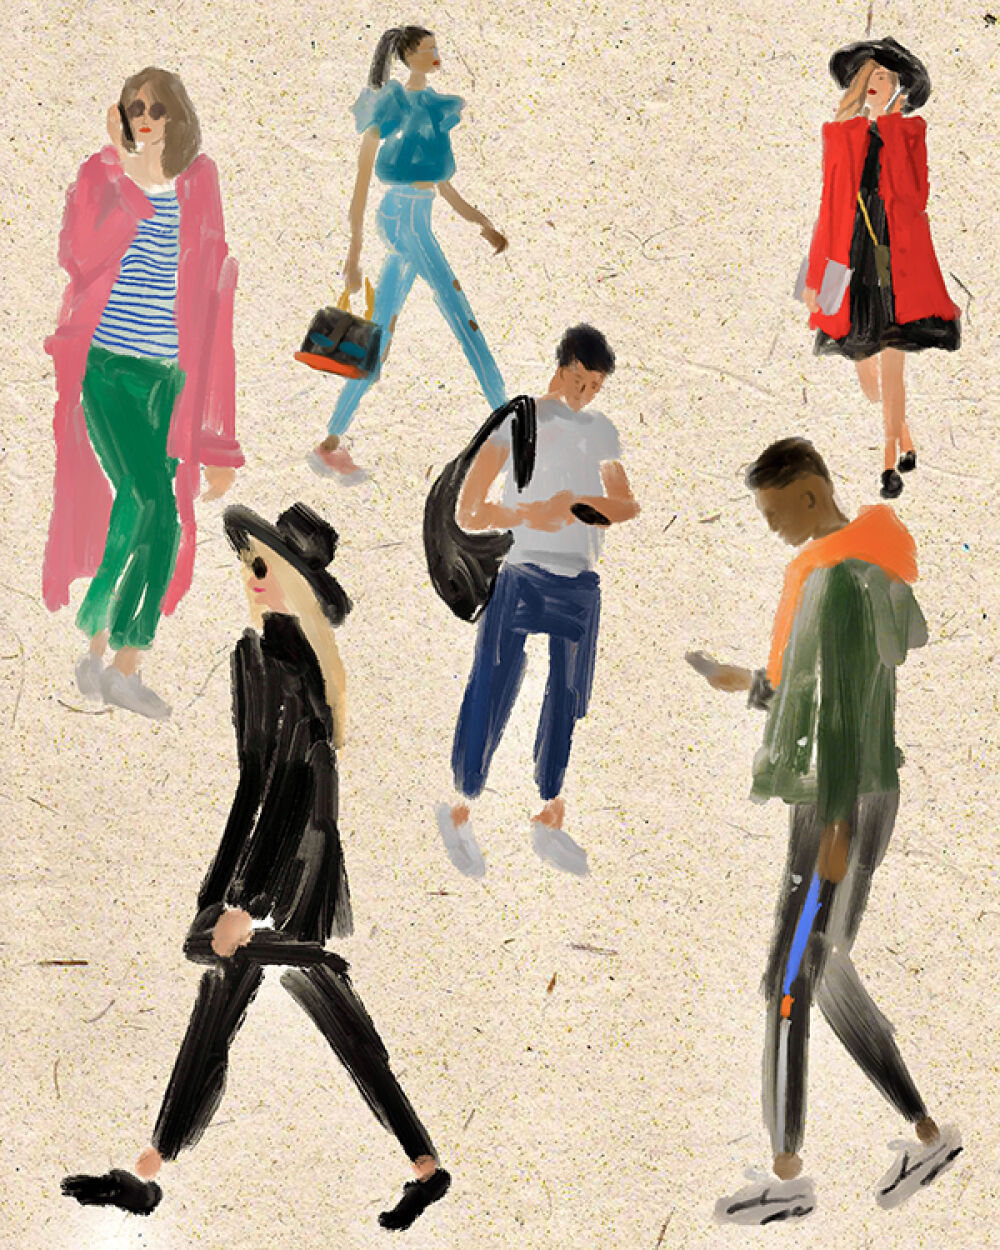 Fashion and lifestyle illustration by Christina Gliha